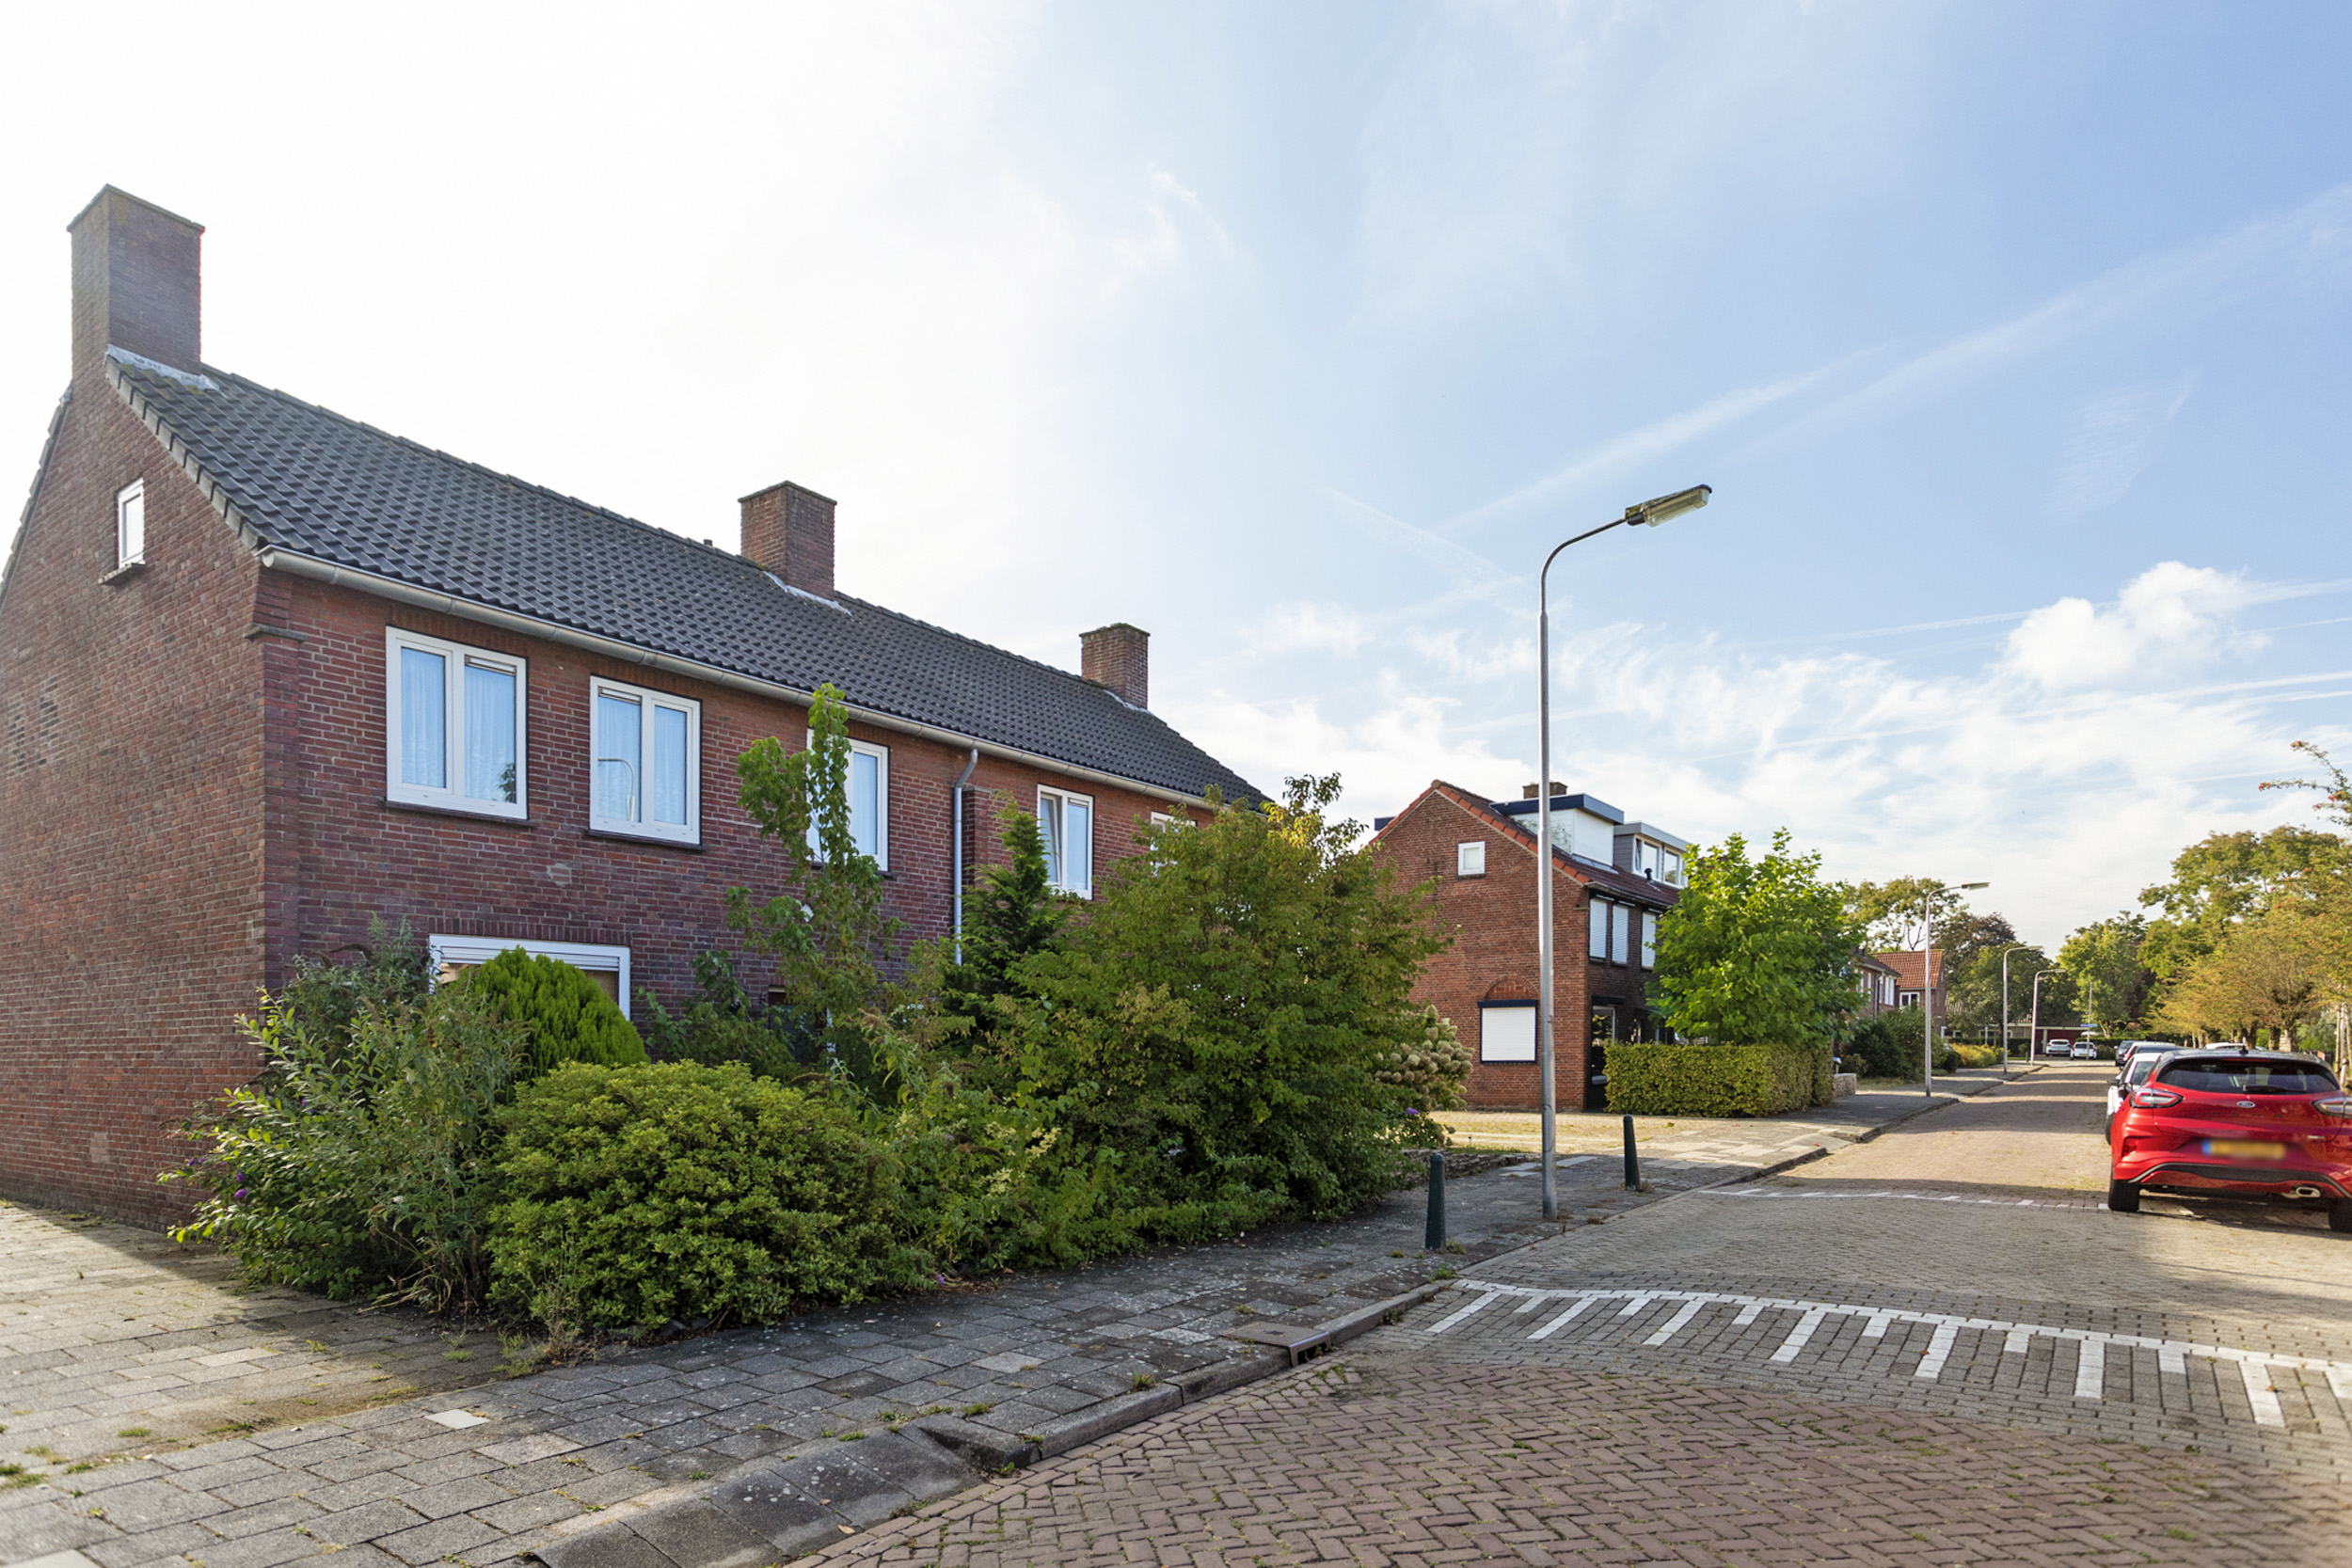 Philips Willemstraat 25, 4671 EX Dinteloord, Nederland